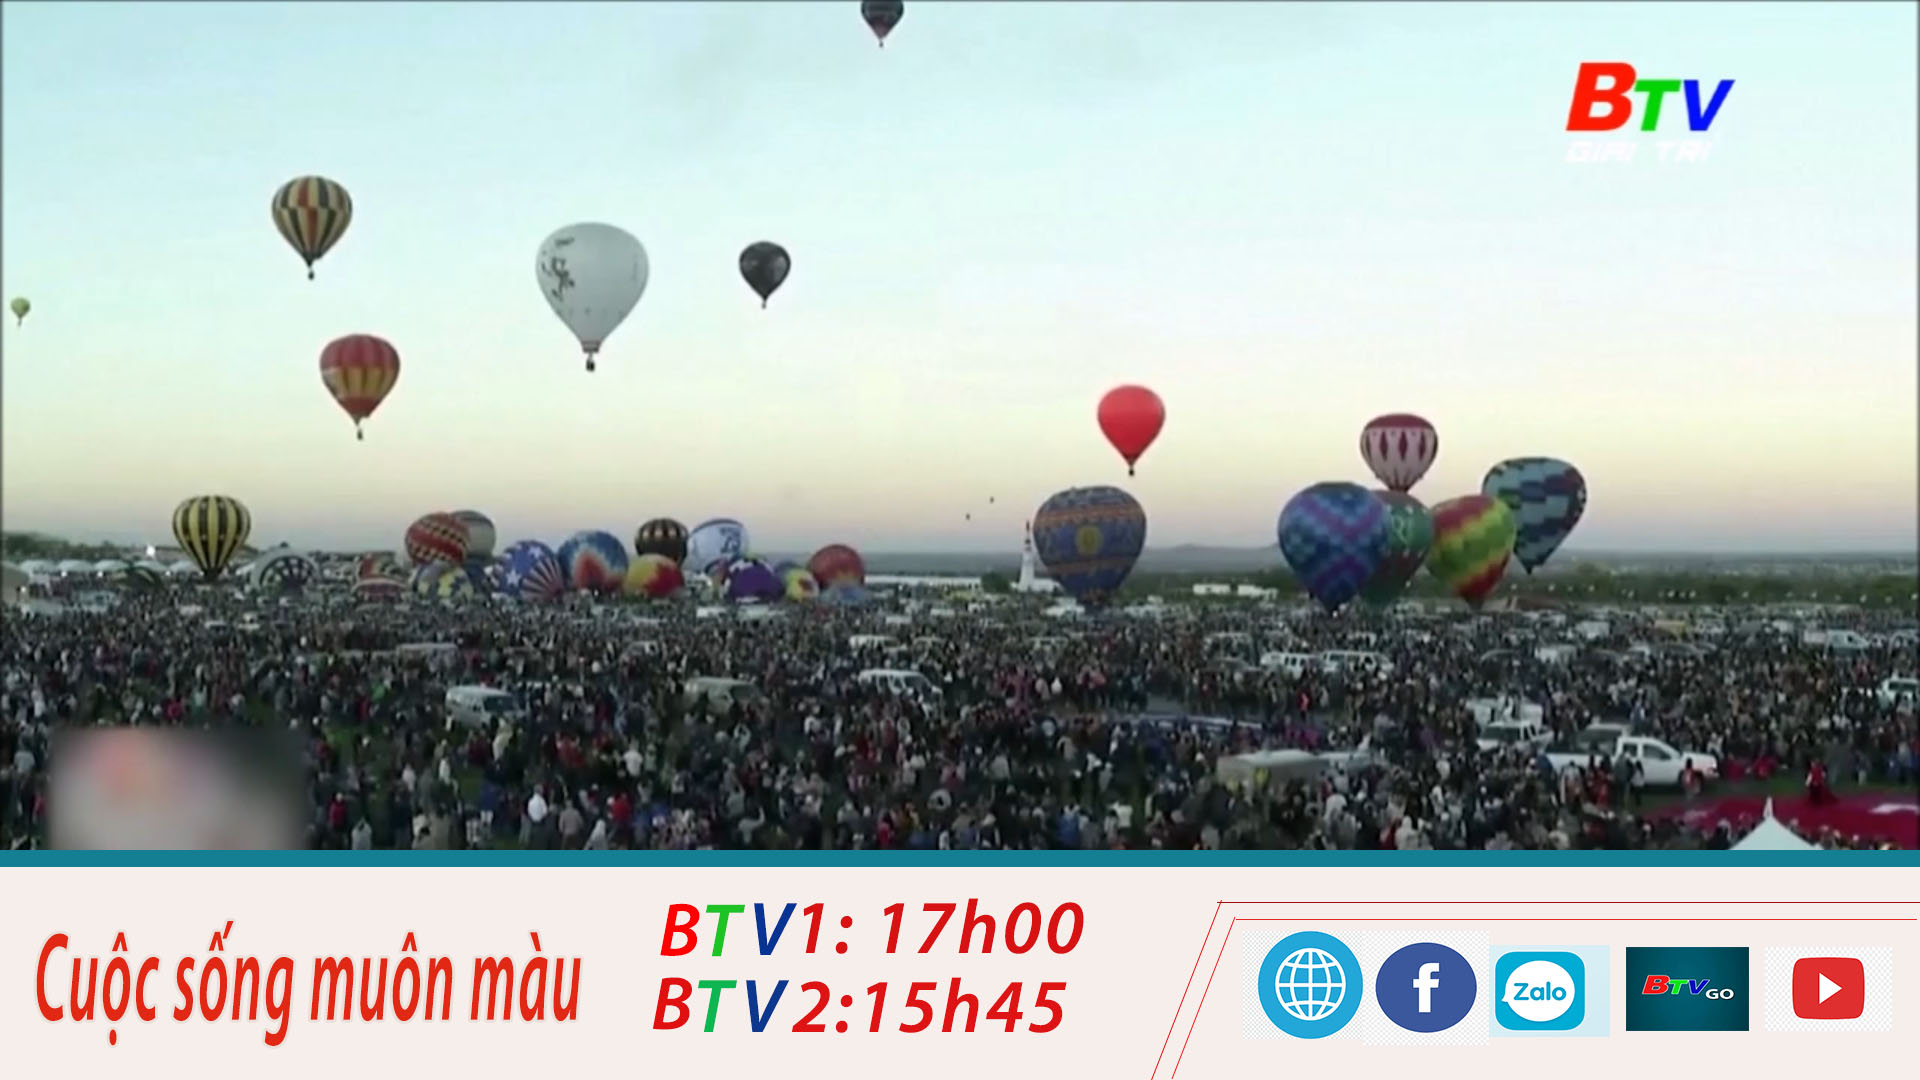 Lễ hội khinh khí cầu quốc tế Albuquerque, Mỹ